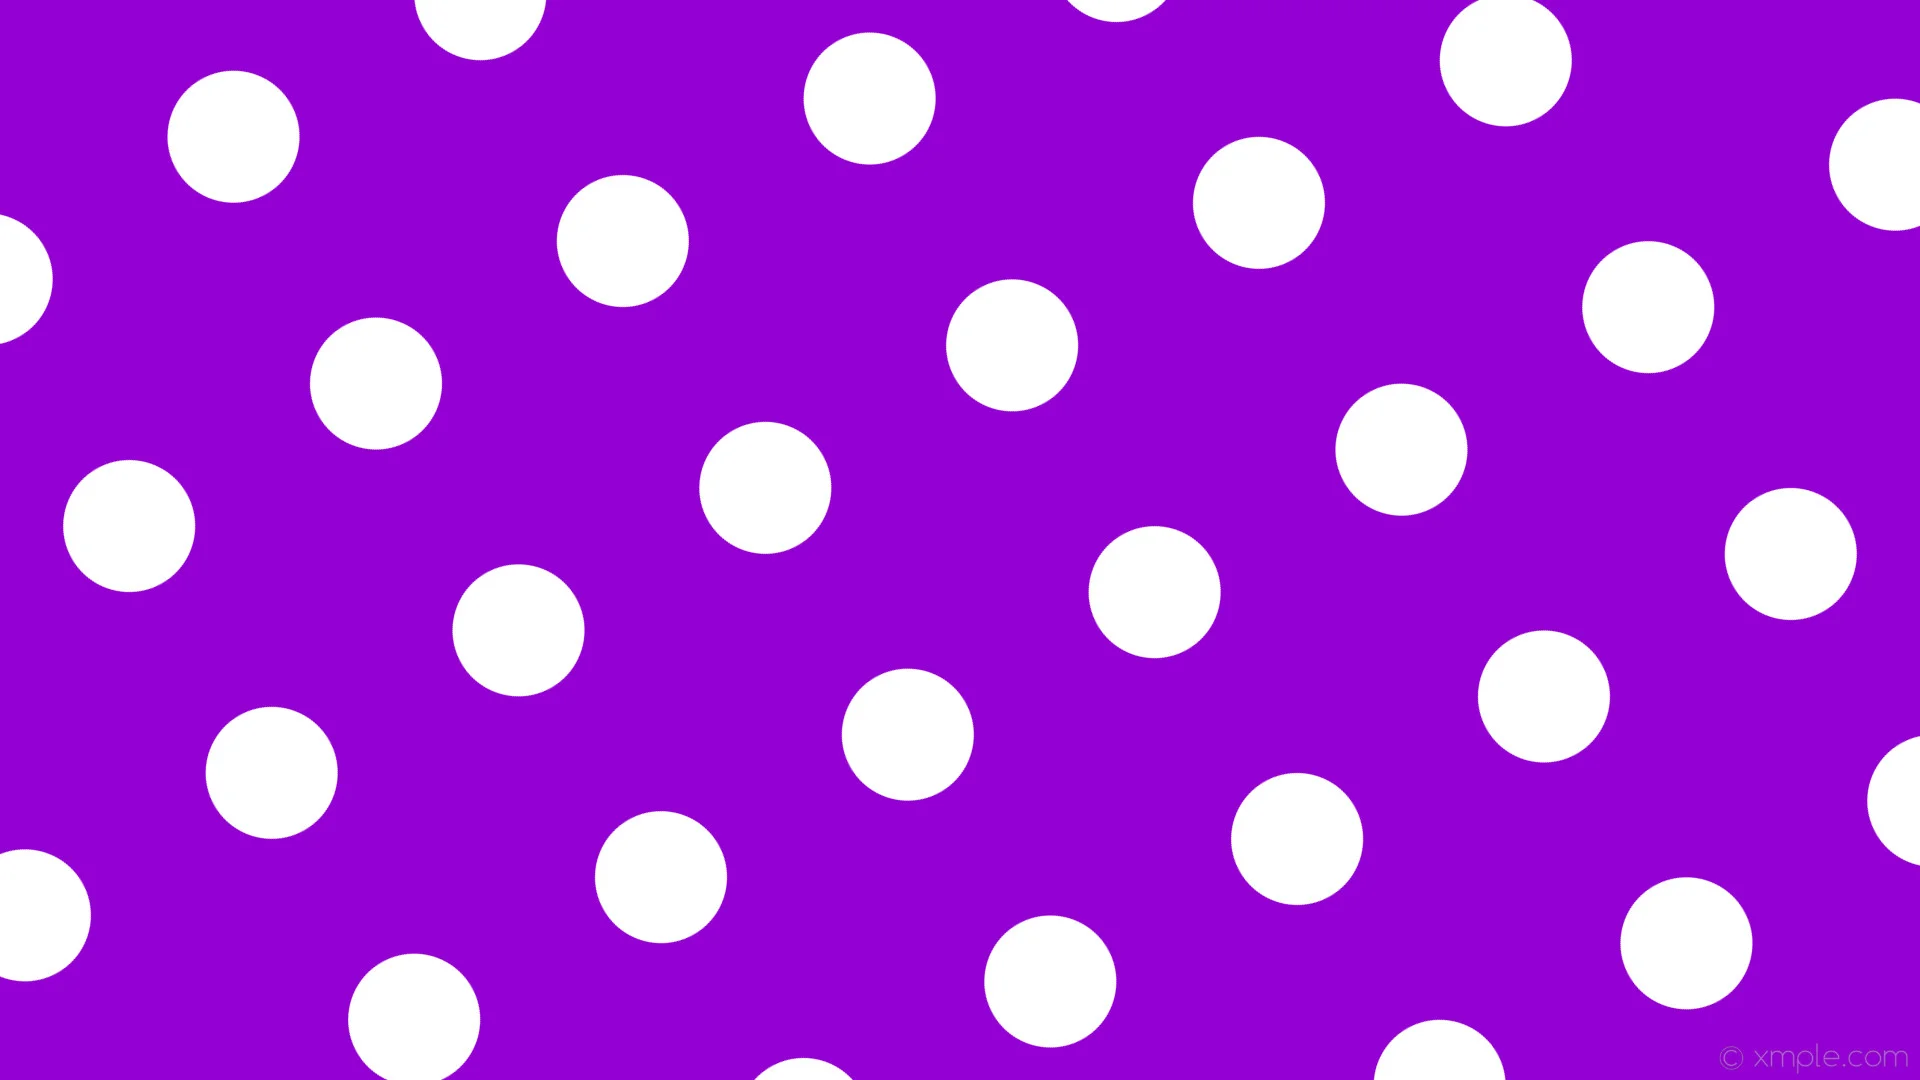 wallpaper spots purple white polka dots dark violet #9400d3 #ffffff 120Â°  132px 285px